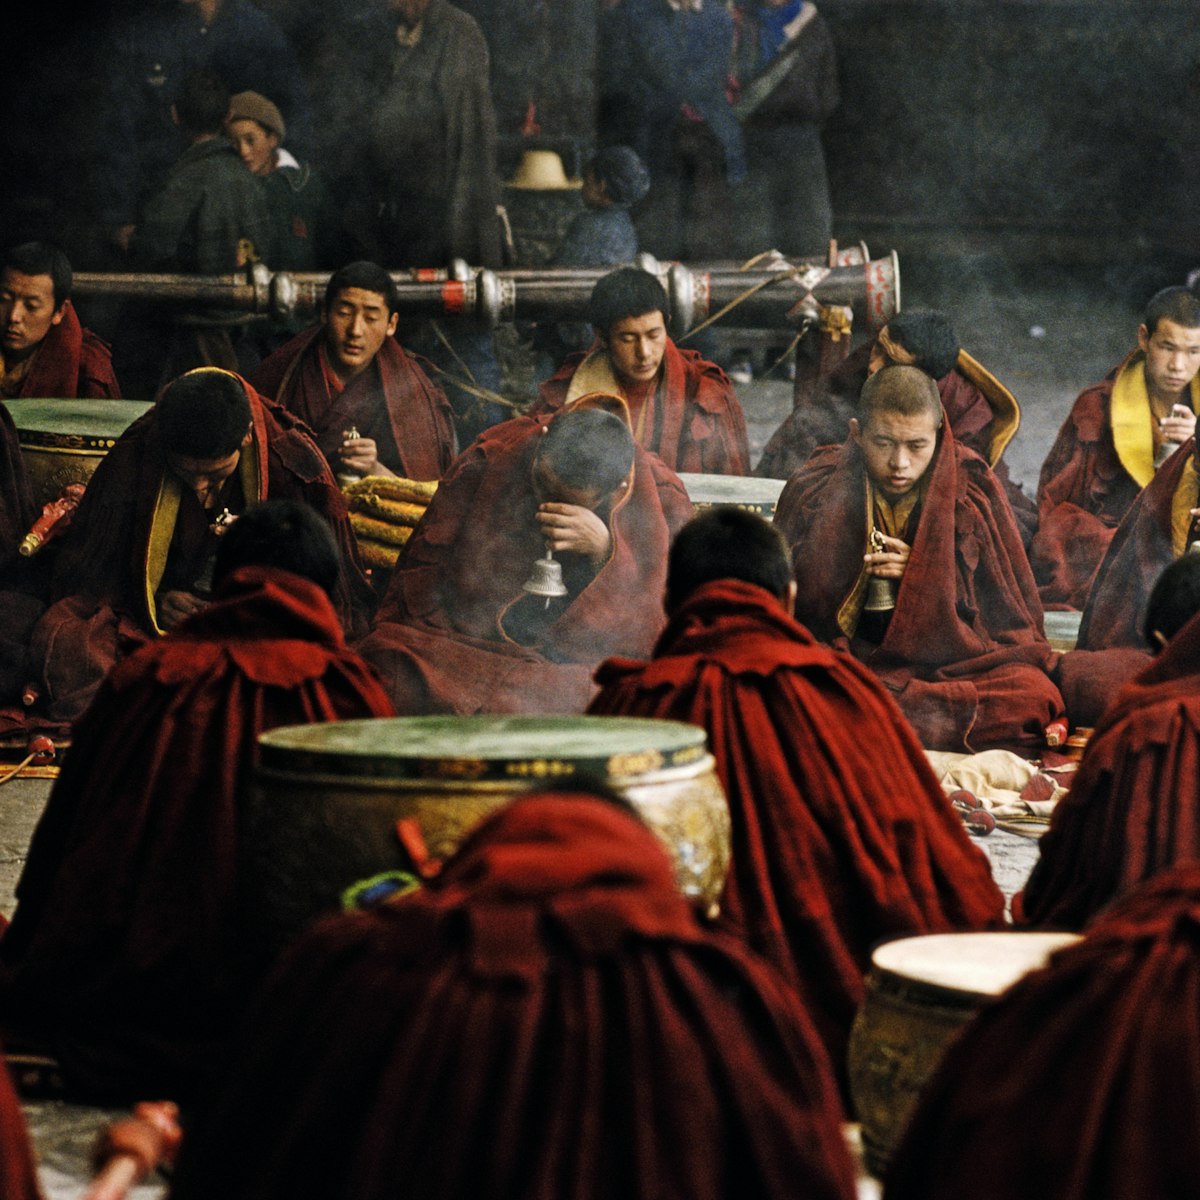 Tibet, Lhasa, monks chanting at Jokhang temple